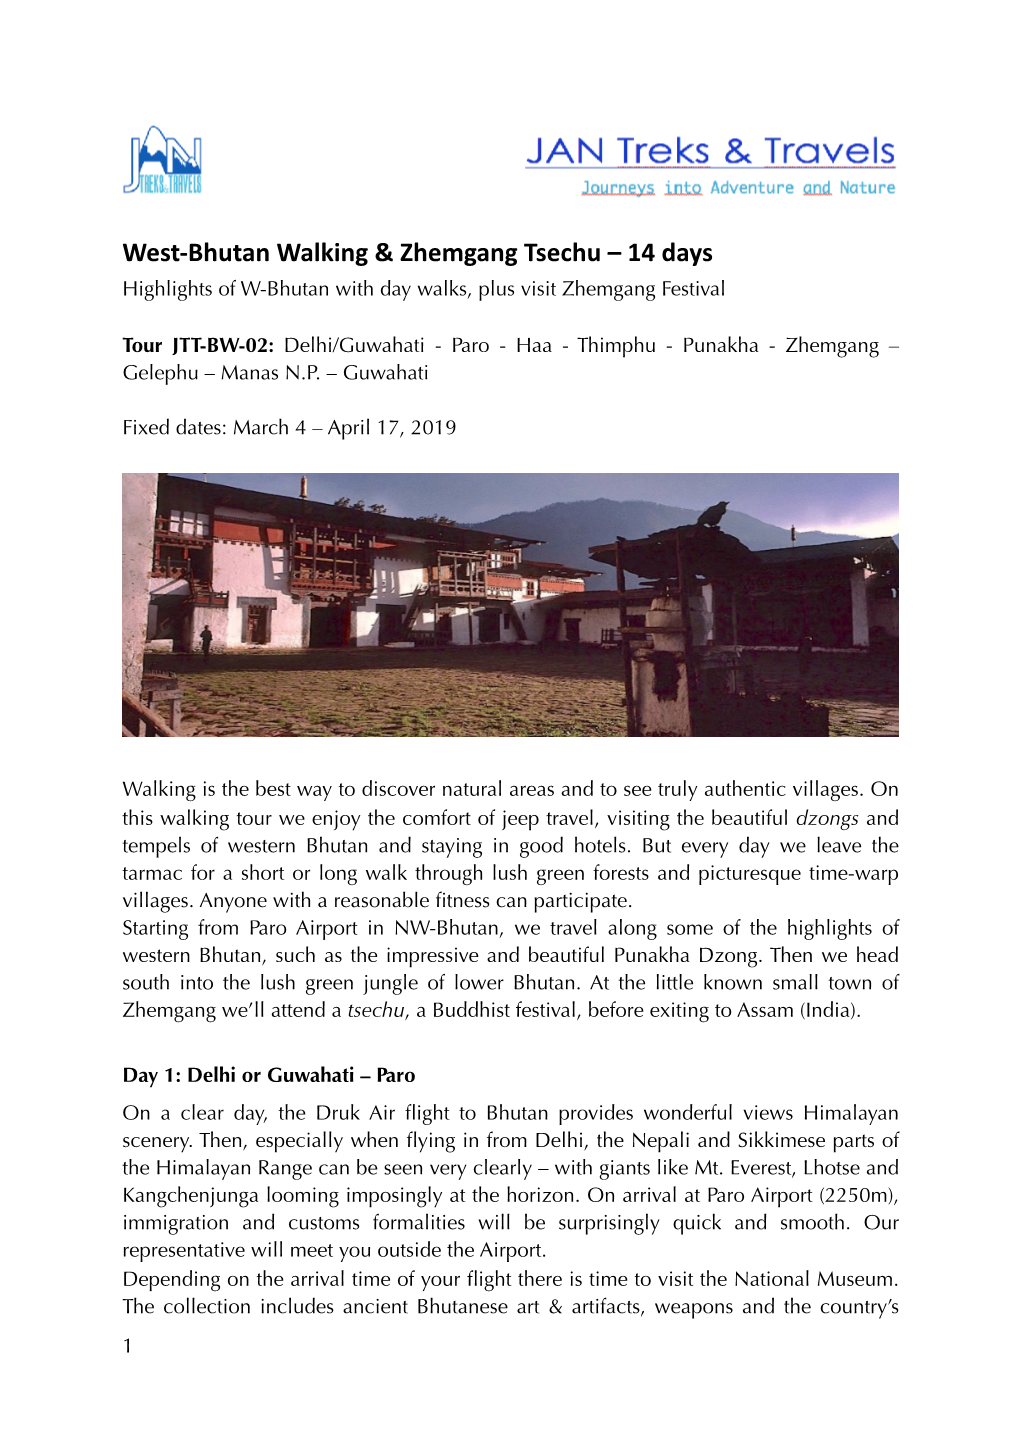 West-Bhutan Walking & Zhemgang Tsechu – 14 Days